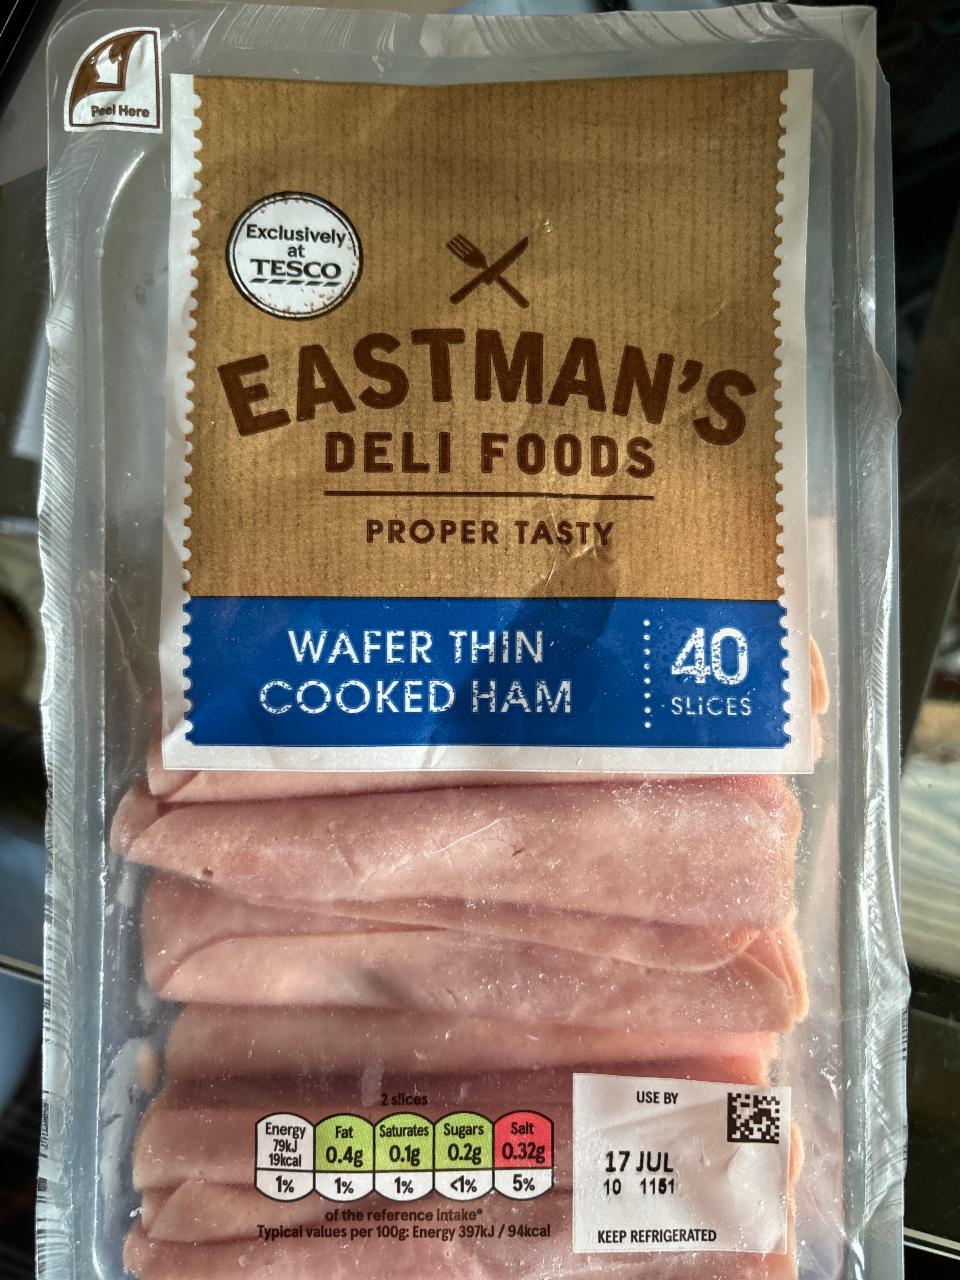 Fotografie - Wafer thin cooked ham Eastman's deli foods Tesco